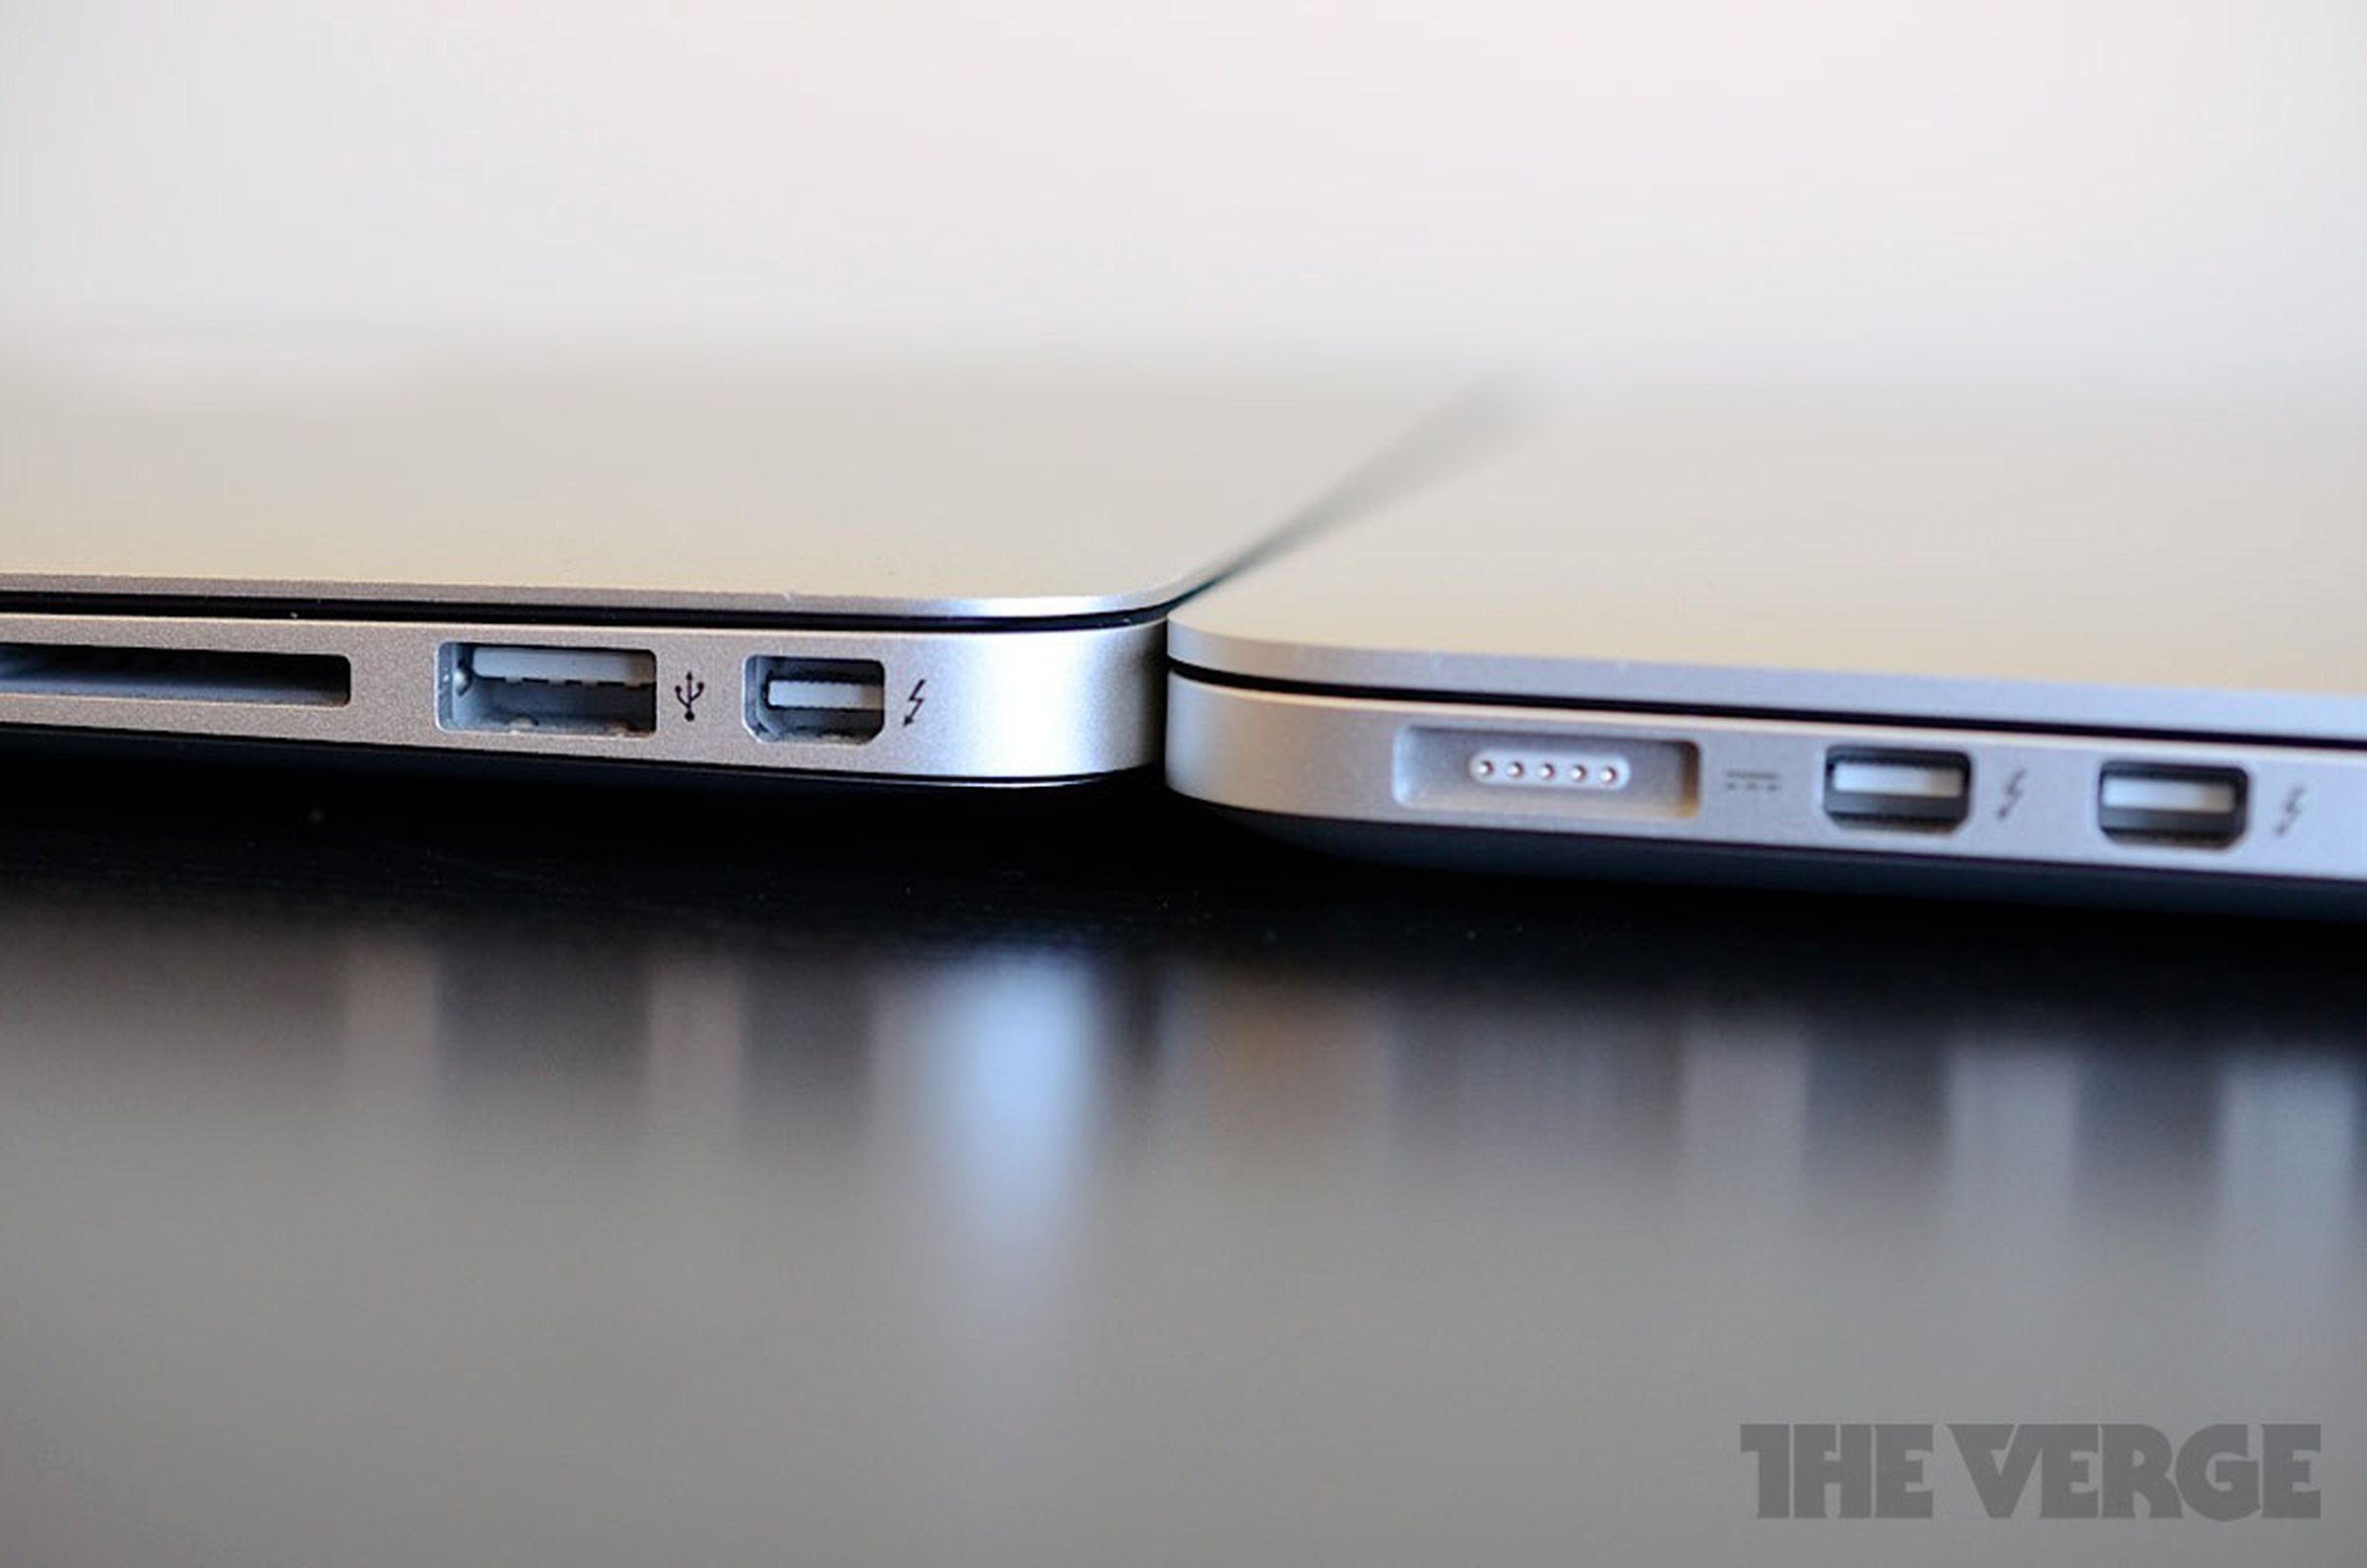 New MacBook Pro with Retina display vs. MacBook Air